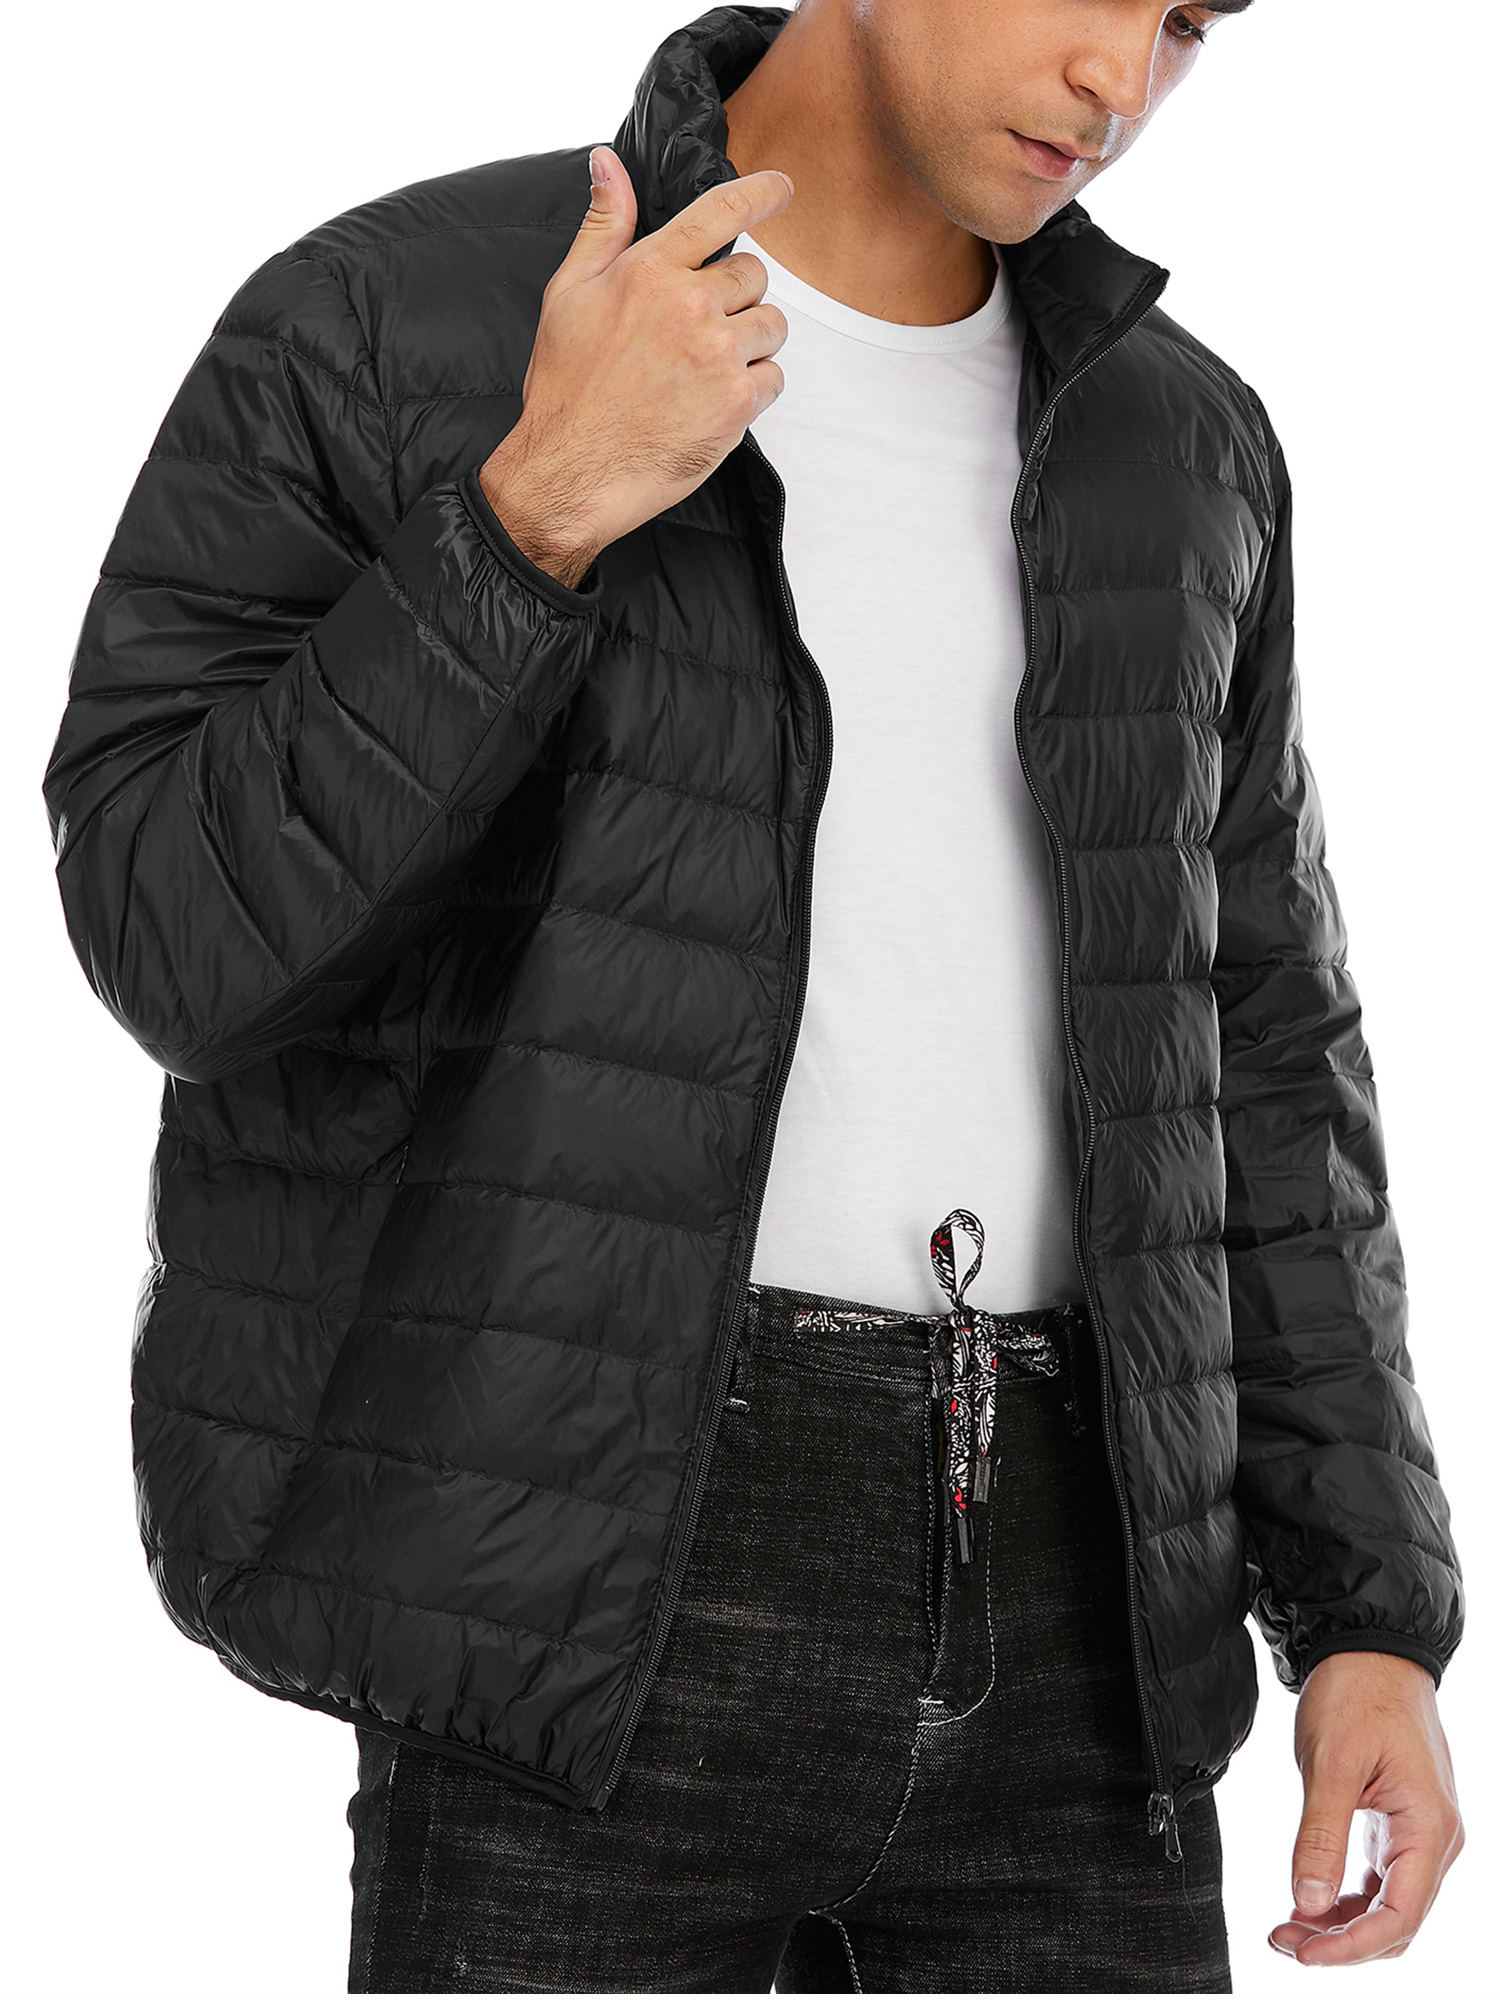 FOCUSSEXY Men Down Jacket Outwear Winter Outerwear Zip Up Windbreaker Lightweight Winter Jackets Casual Zip Up Puffer Coats Packable Puffer Jacket, Black - image 4 of 7